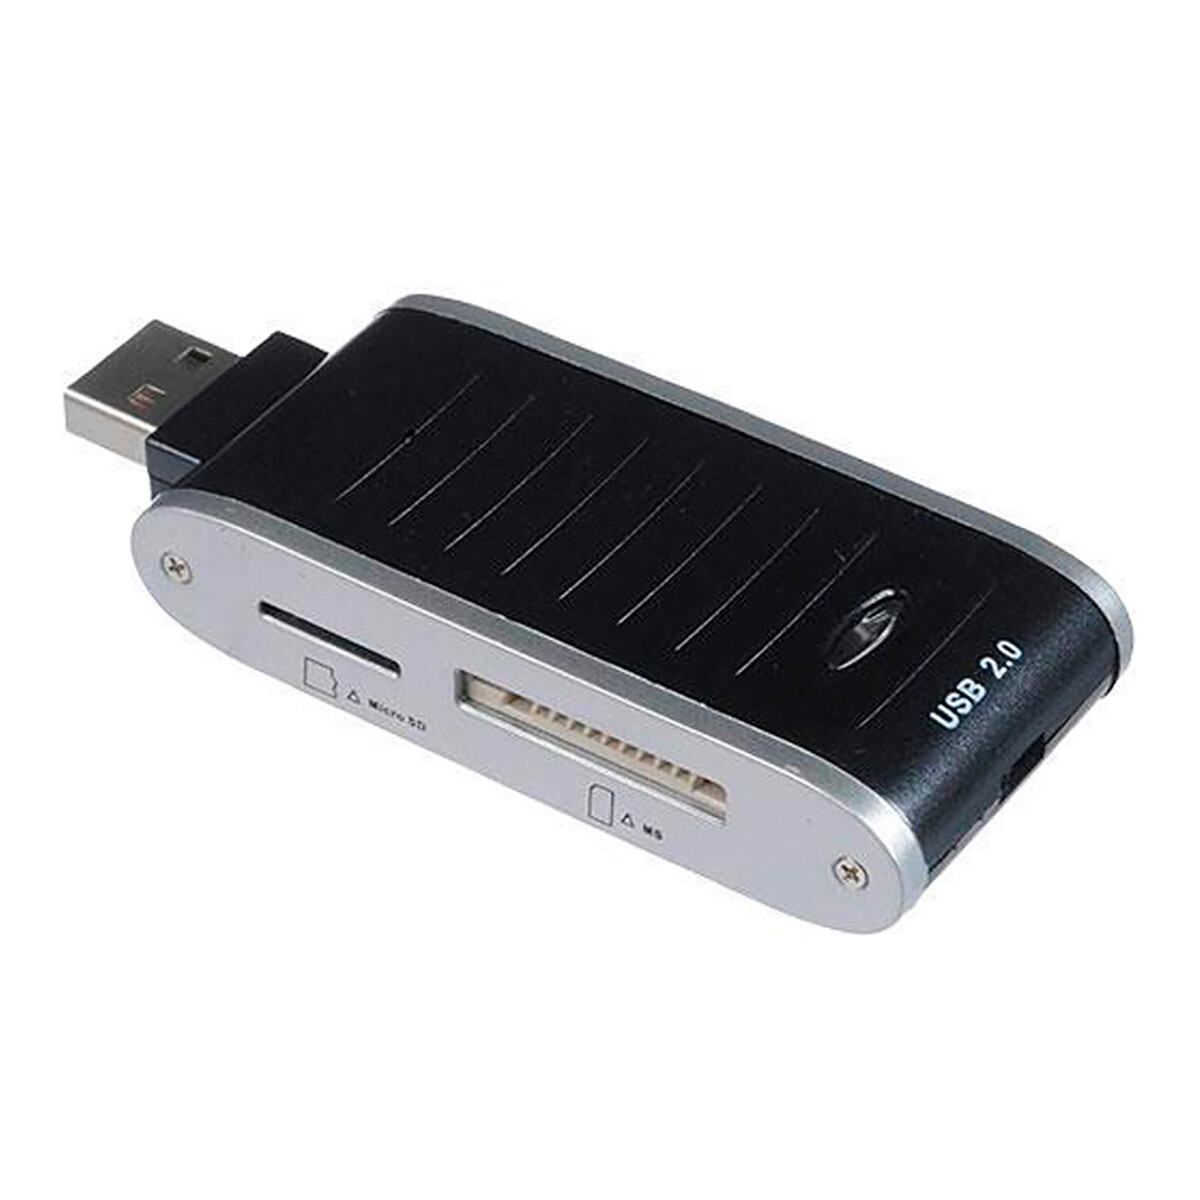 Vivitar - Lector de Tarjetas 50 en 1. VIV-RW-5000. 5 Ranuras: USB 2.0. Compatibilidad: Mac, Pc. Neg - 001 